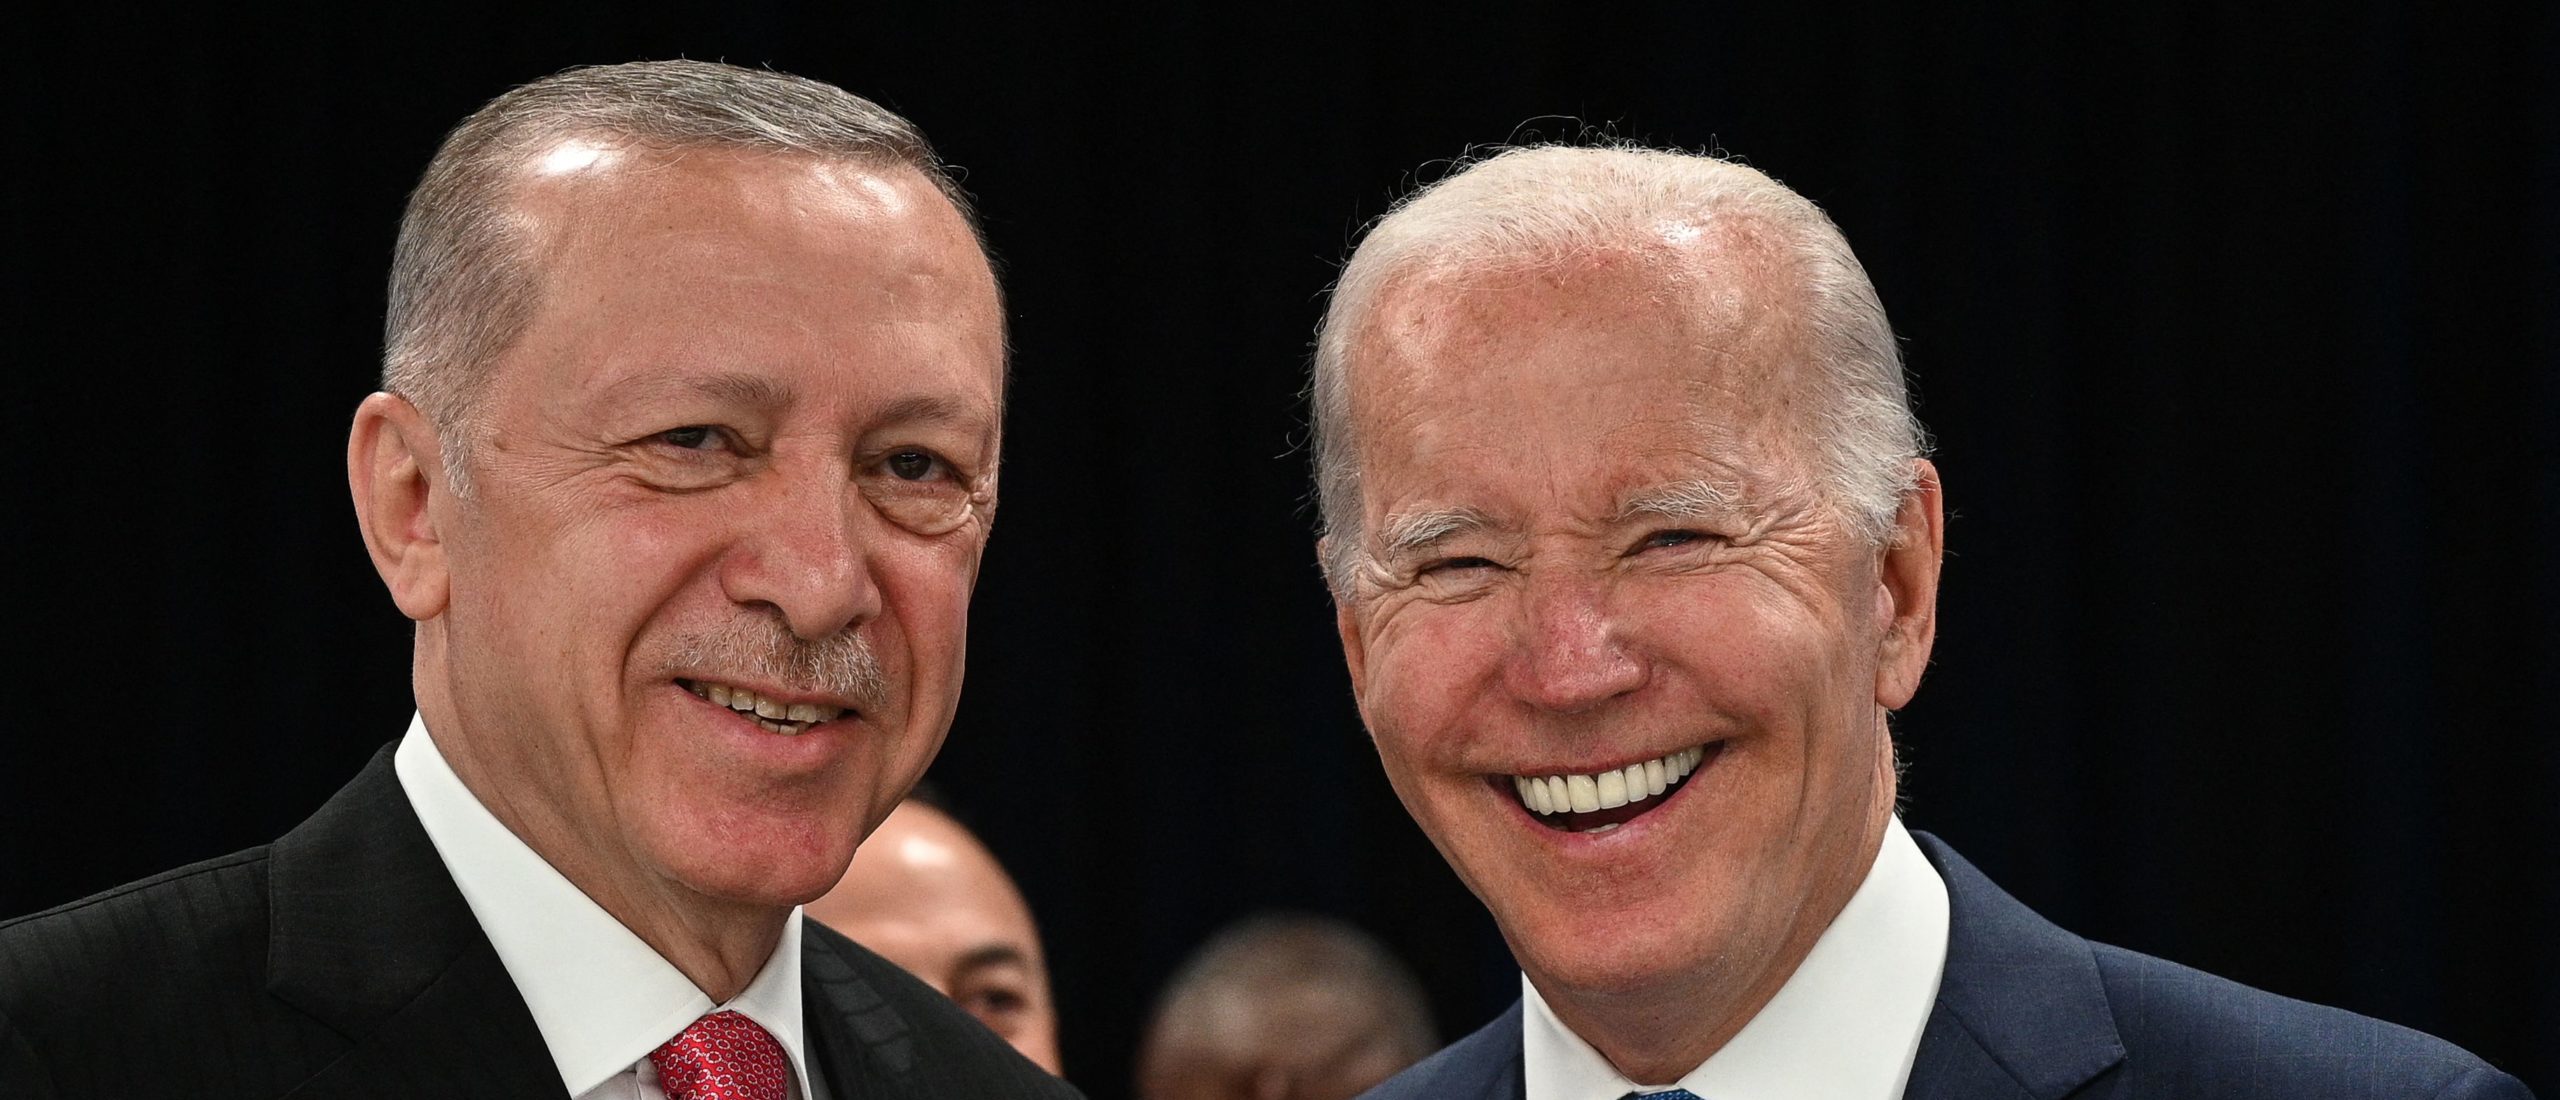 LEAKED DOCS: Turkey Undermining Ukrainian War Effort While Praised By Biden Admin